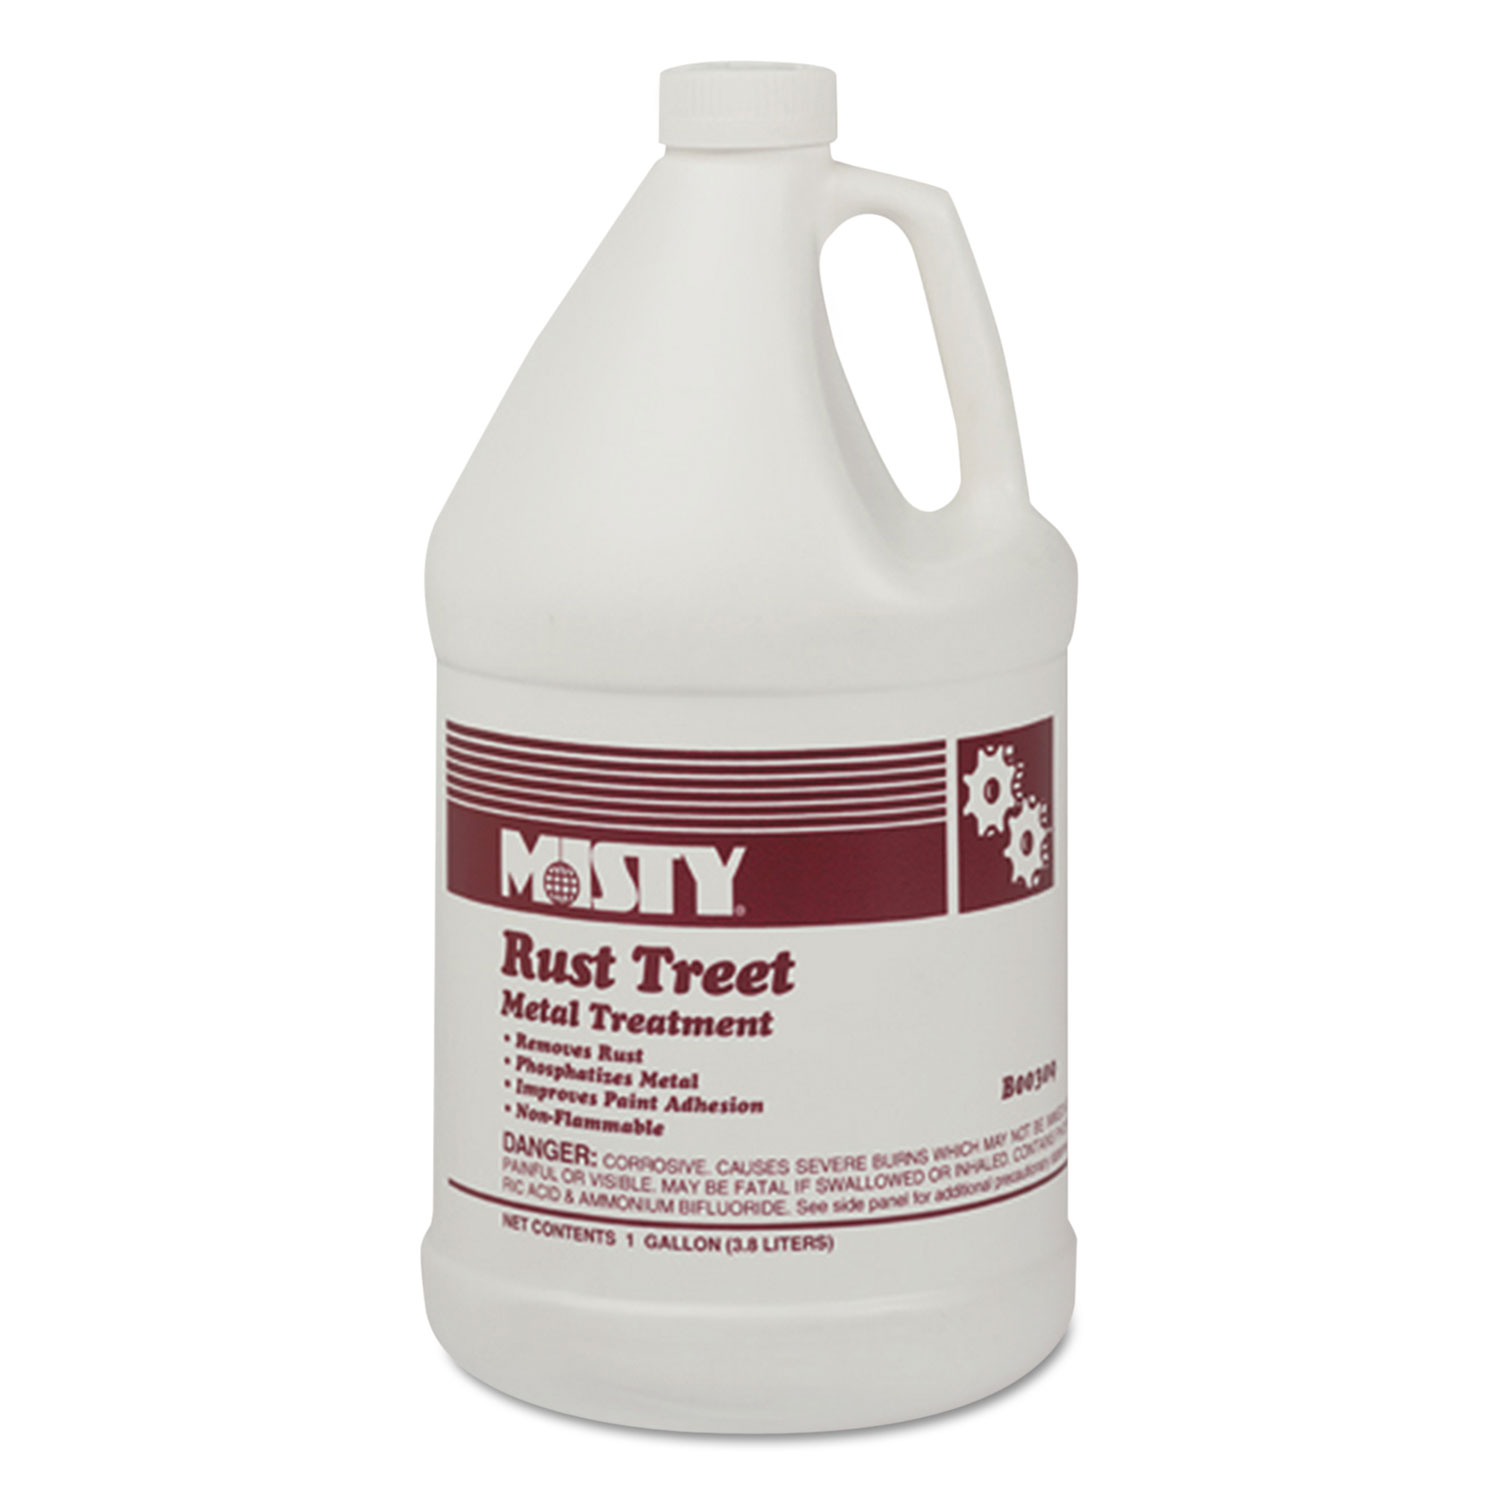  Misty 1002008 Rust Treet Metal Treatment, 55 gal. Drum (AMR1002008) 